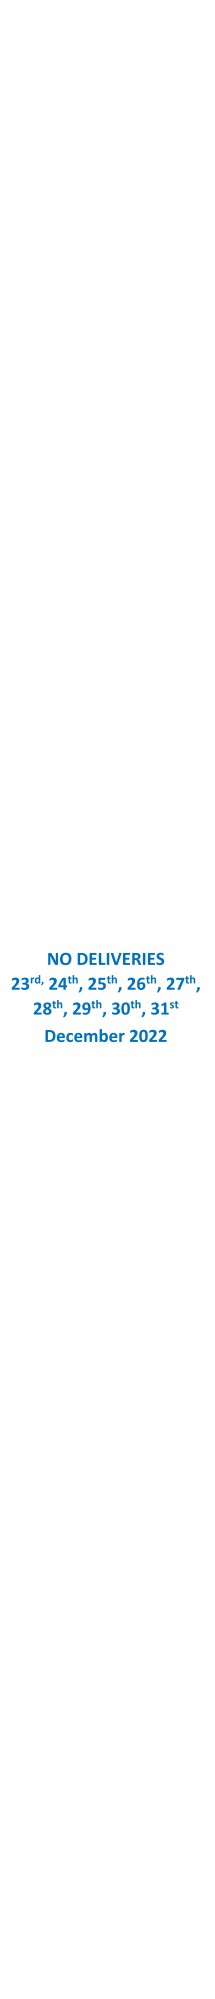 No Deliveries December